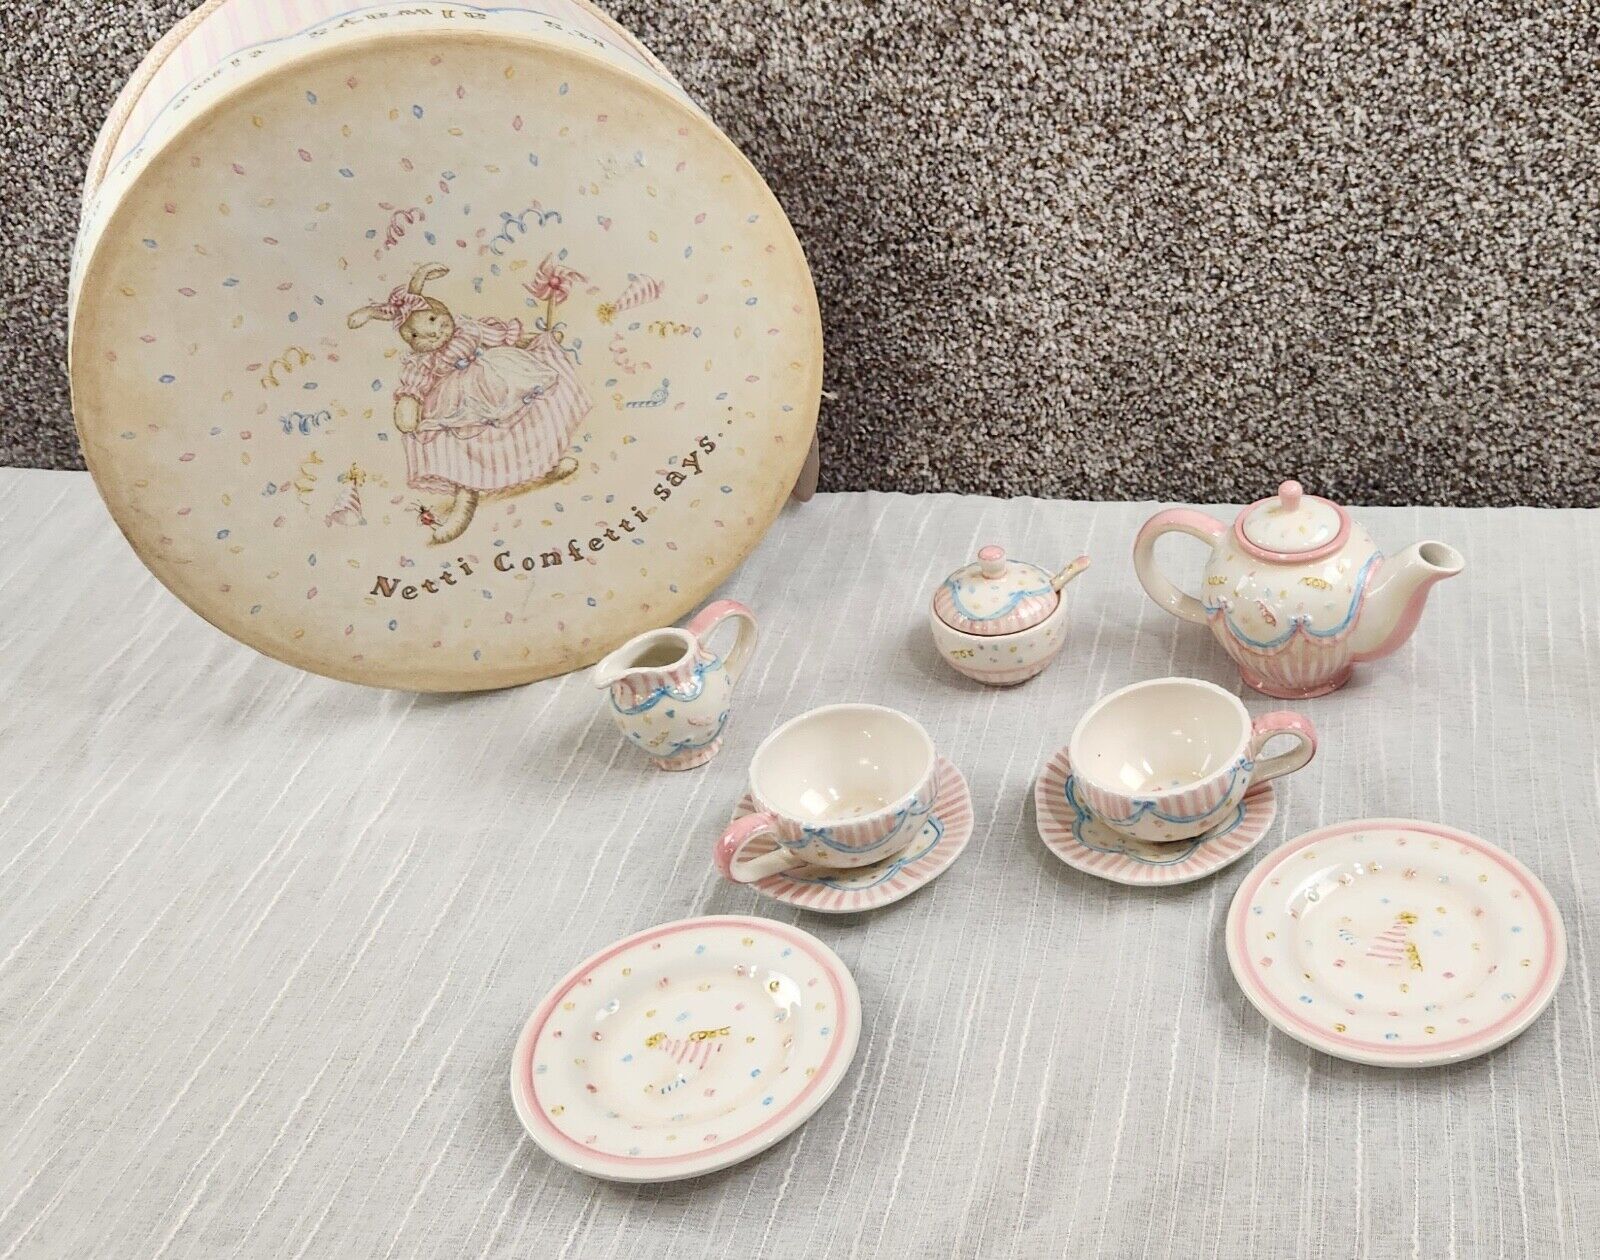 Vintage Netti Confetti's Celebration Tea Set Bunnies By The Bay Tea Set for 2